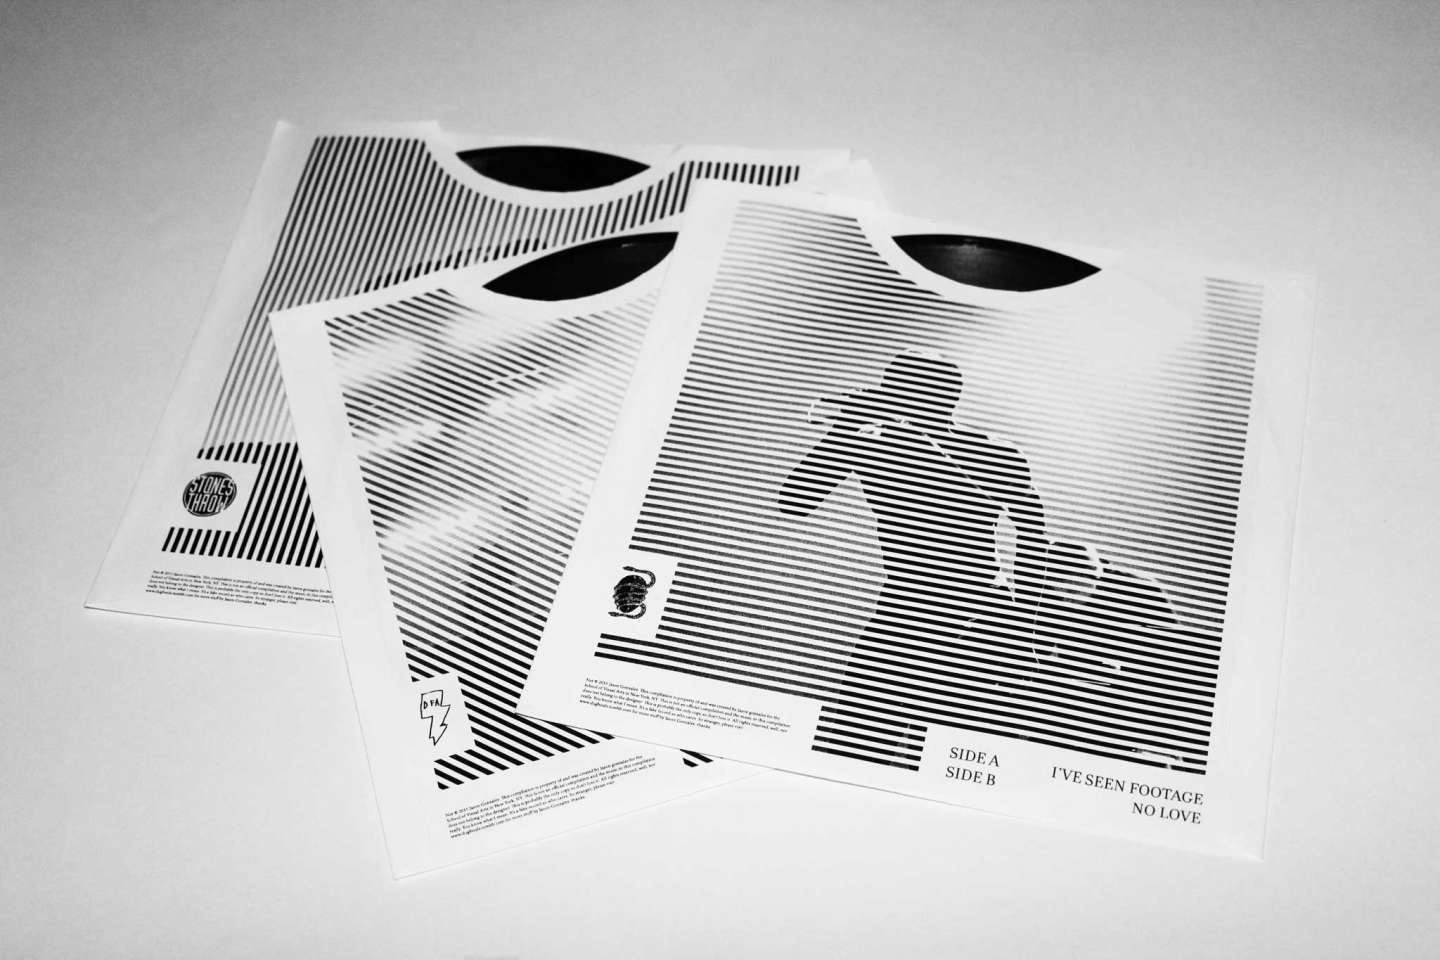 7-Inch Vinyl Designs